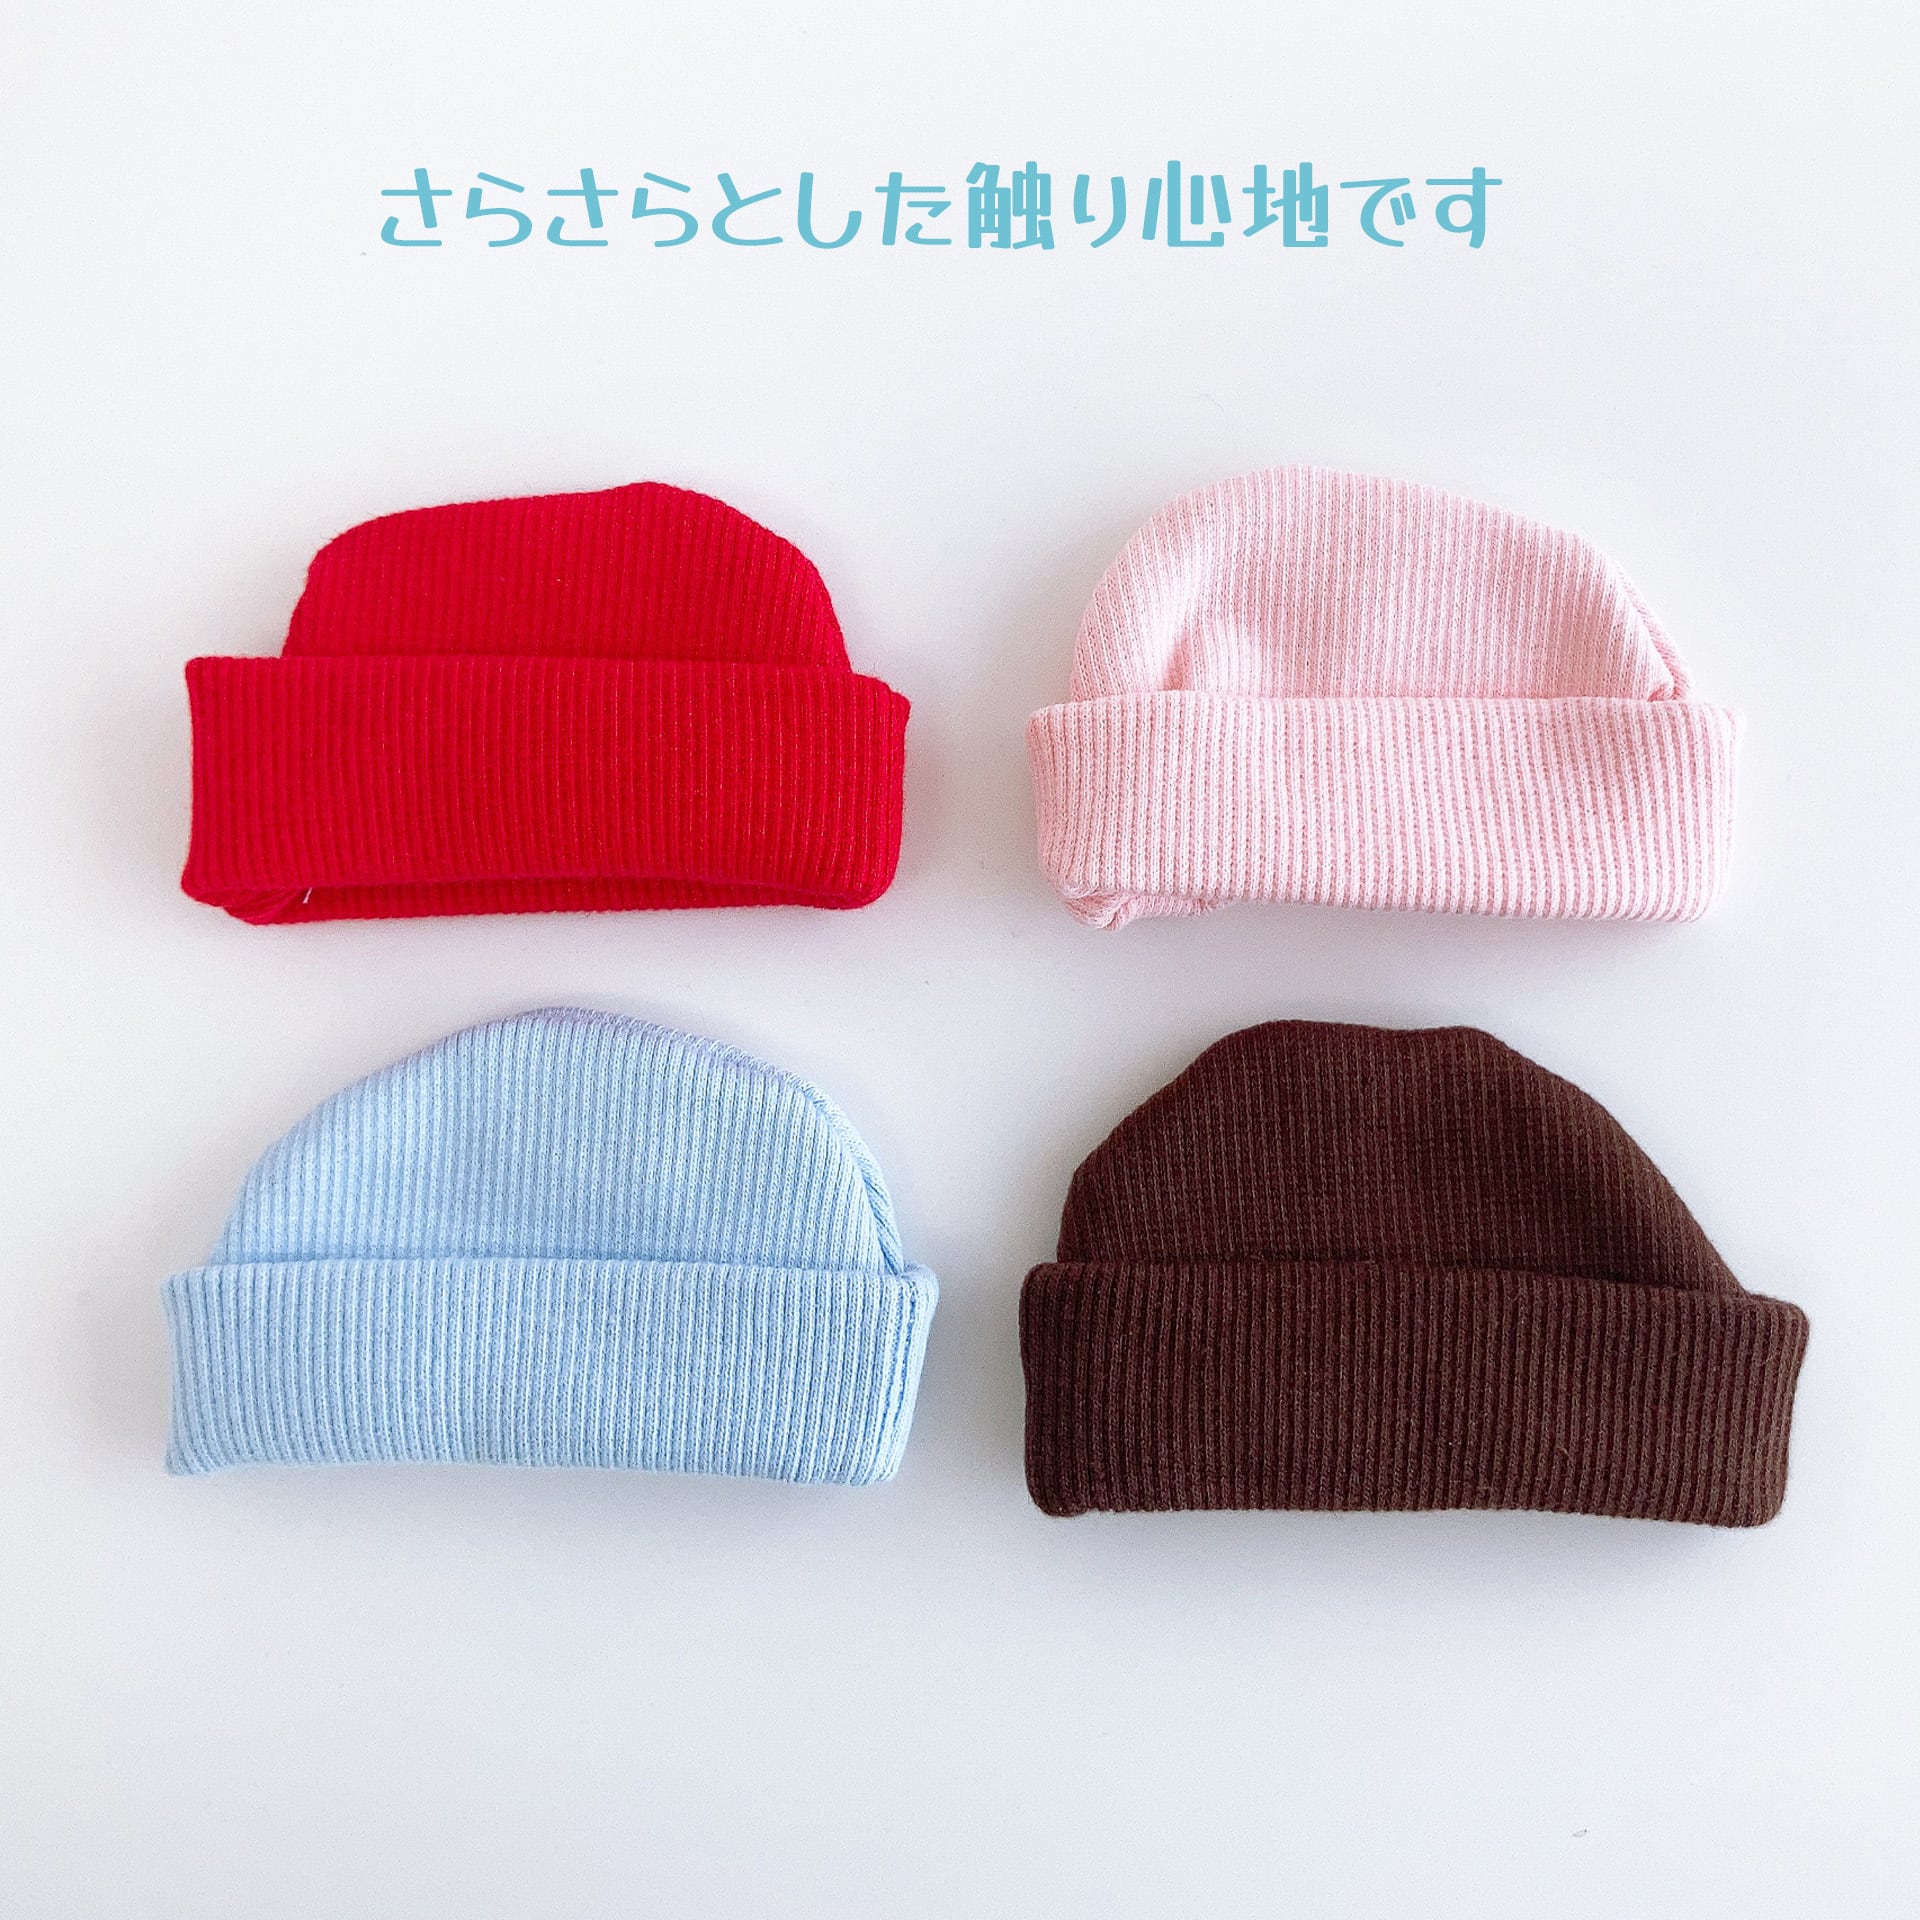 【10cm】アクセサリー サマーニット帽